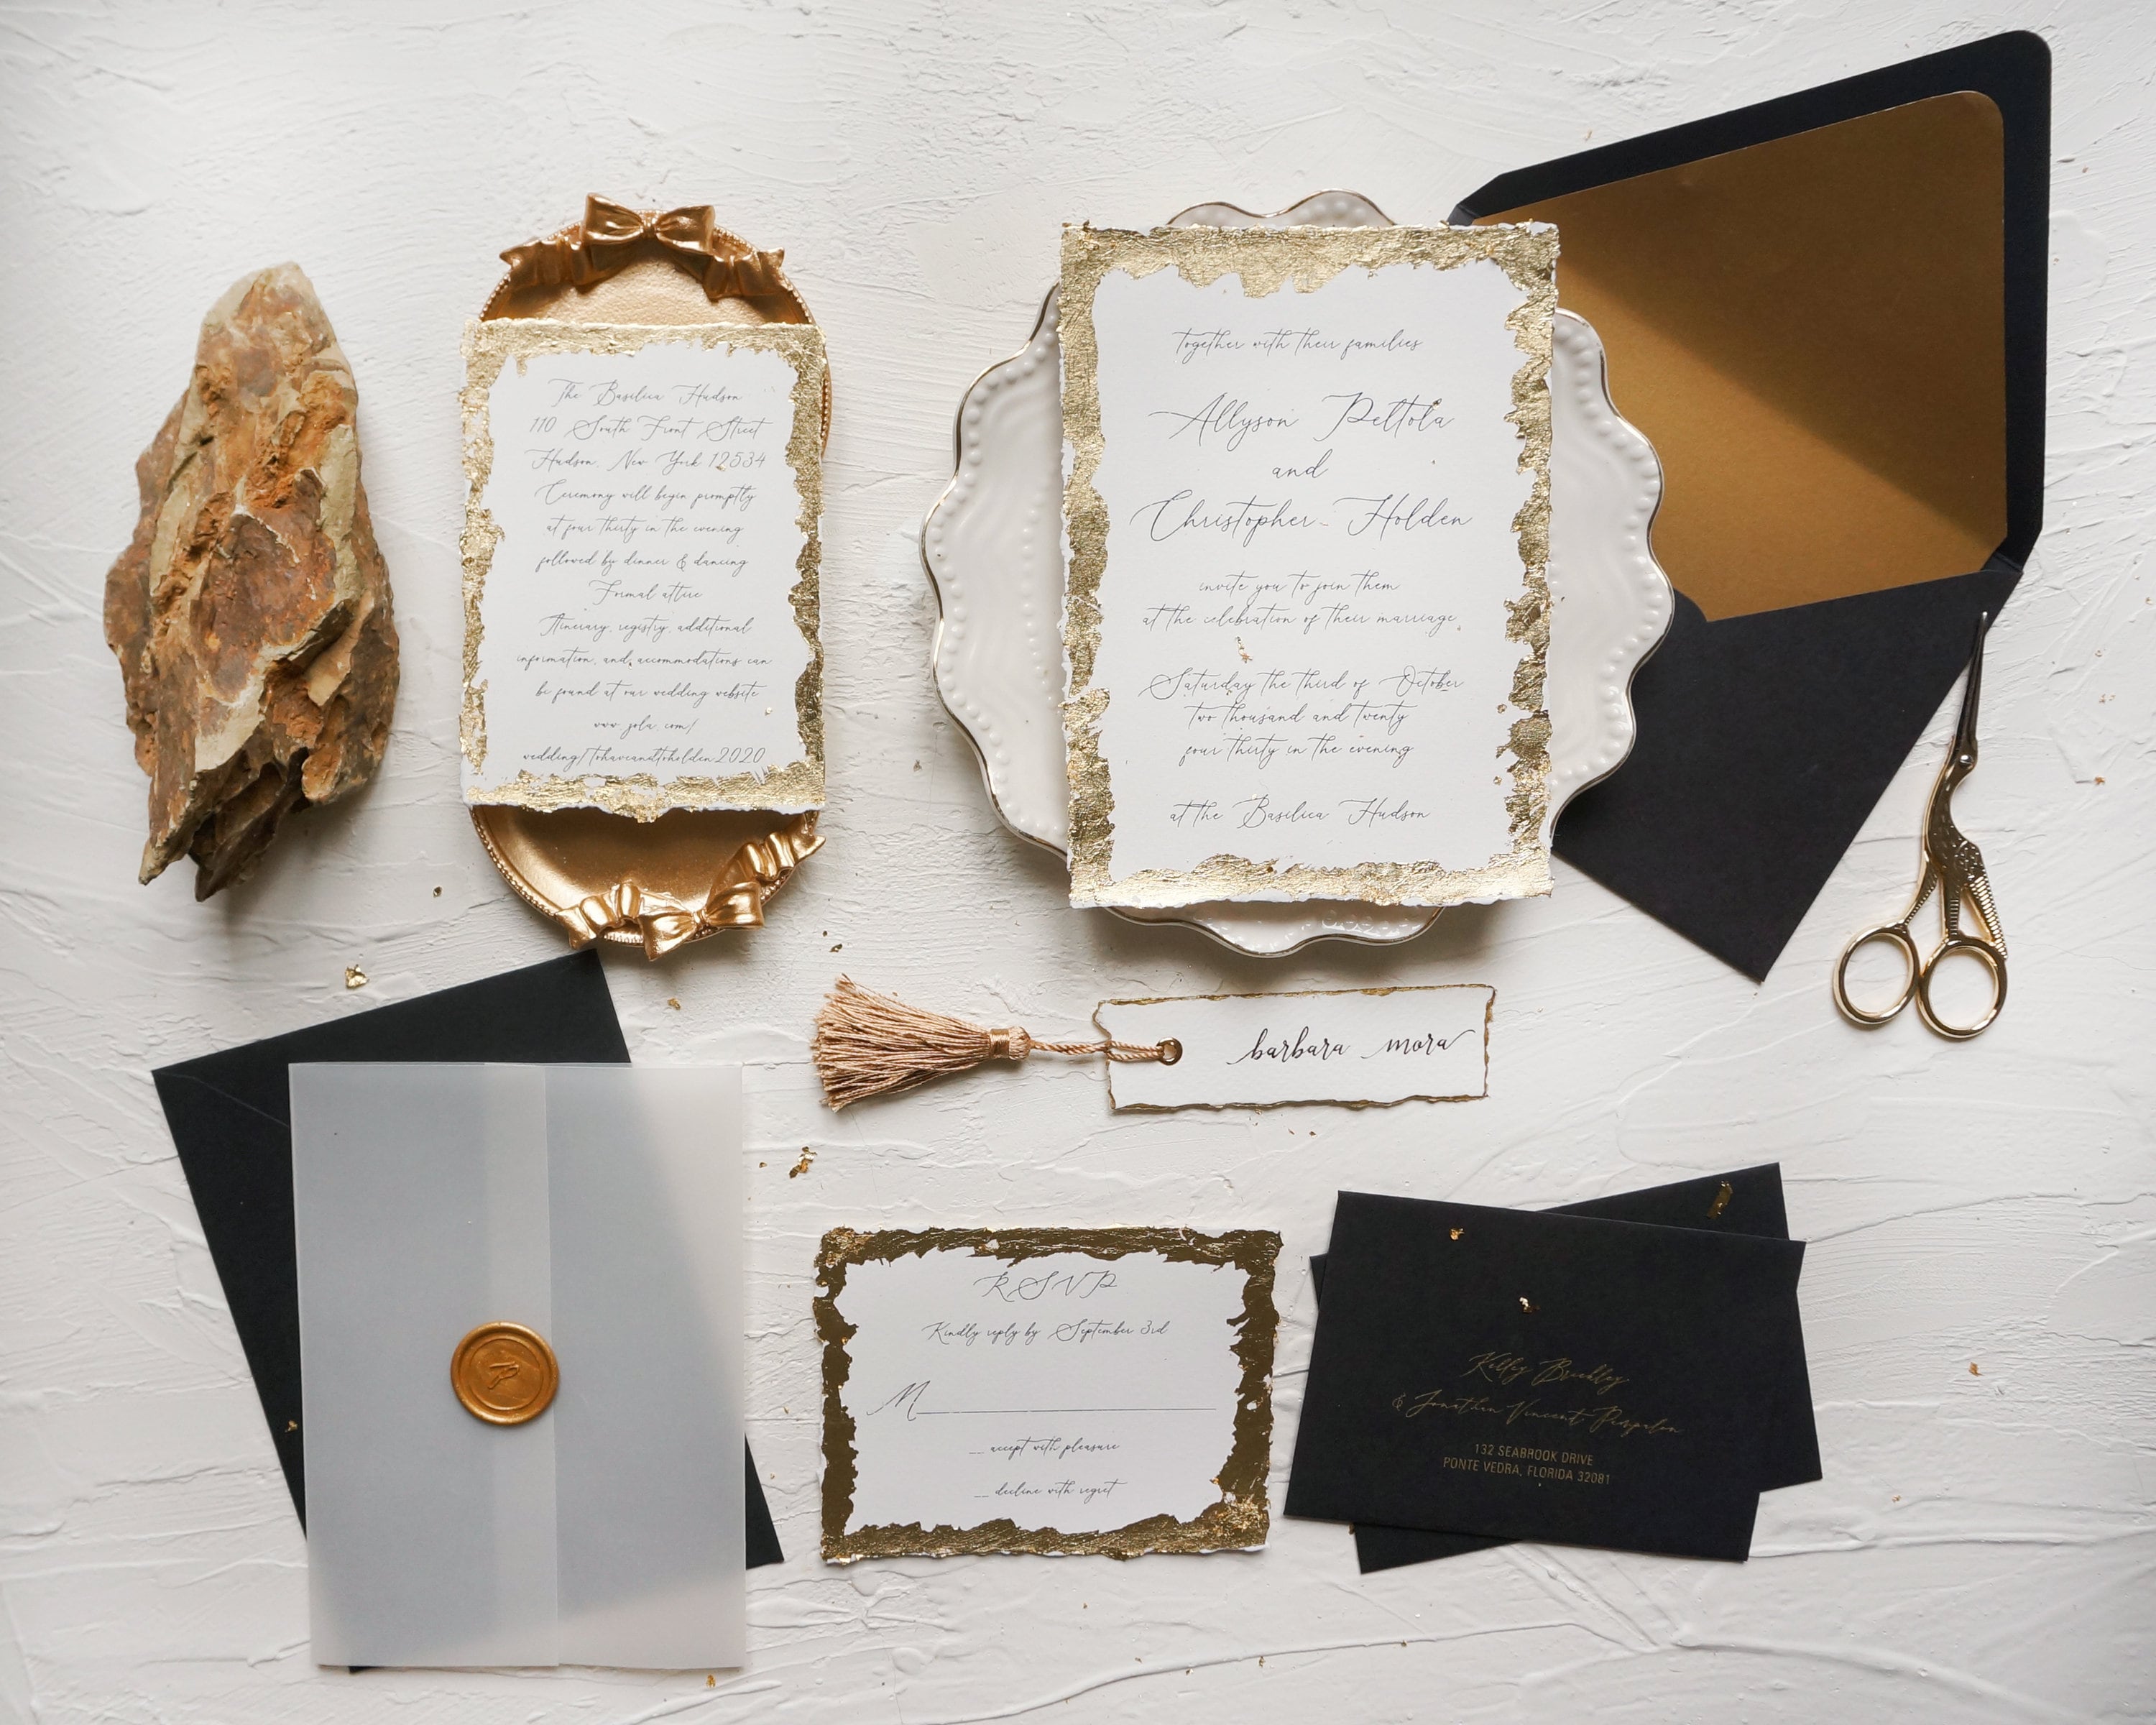 46 Pack 5x7 Envelopes with Gold Border for Invitation,A7 Luxury Envelopes for Invitation,Postcard Envelopes,Photo Envelopes,Ideal for Wedding